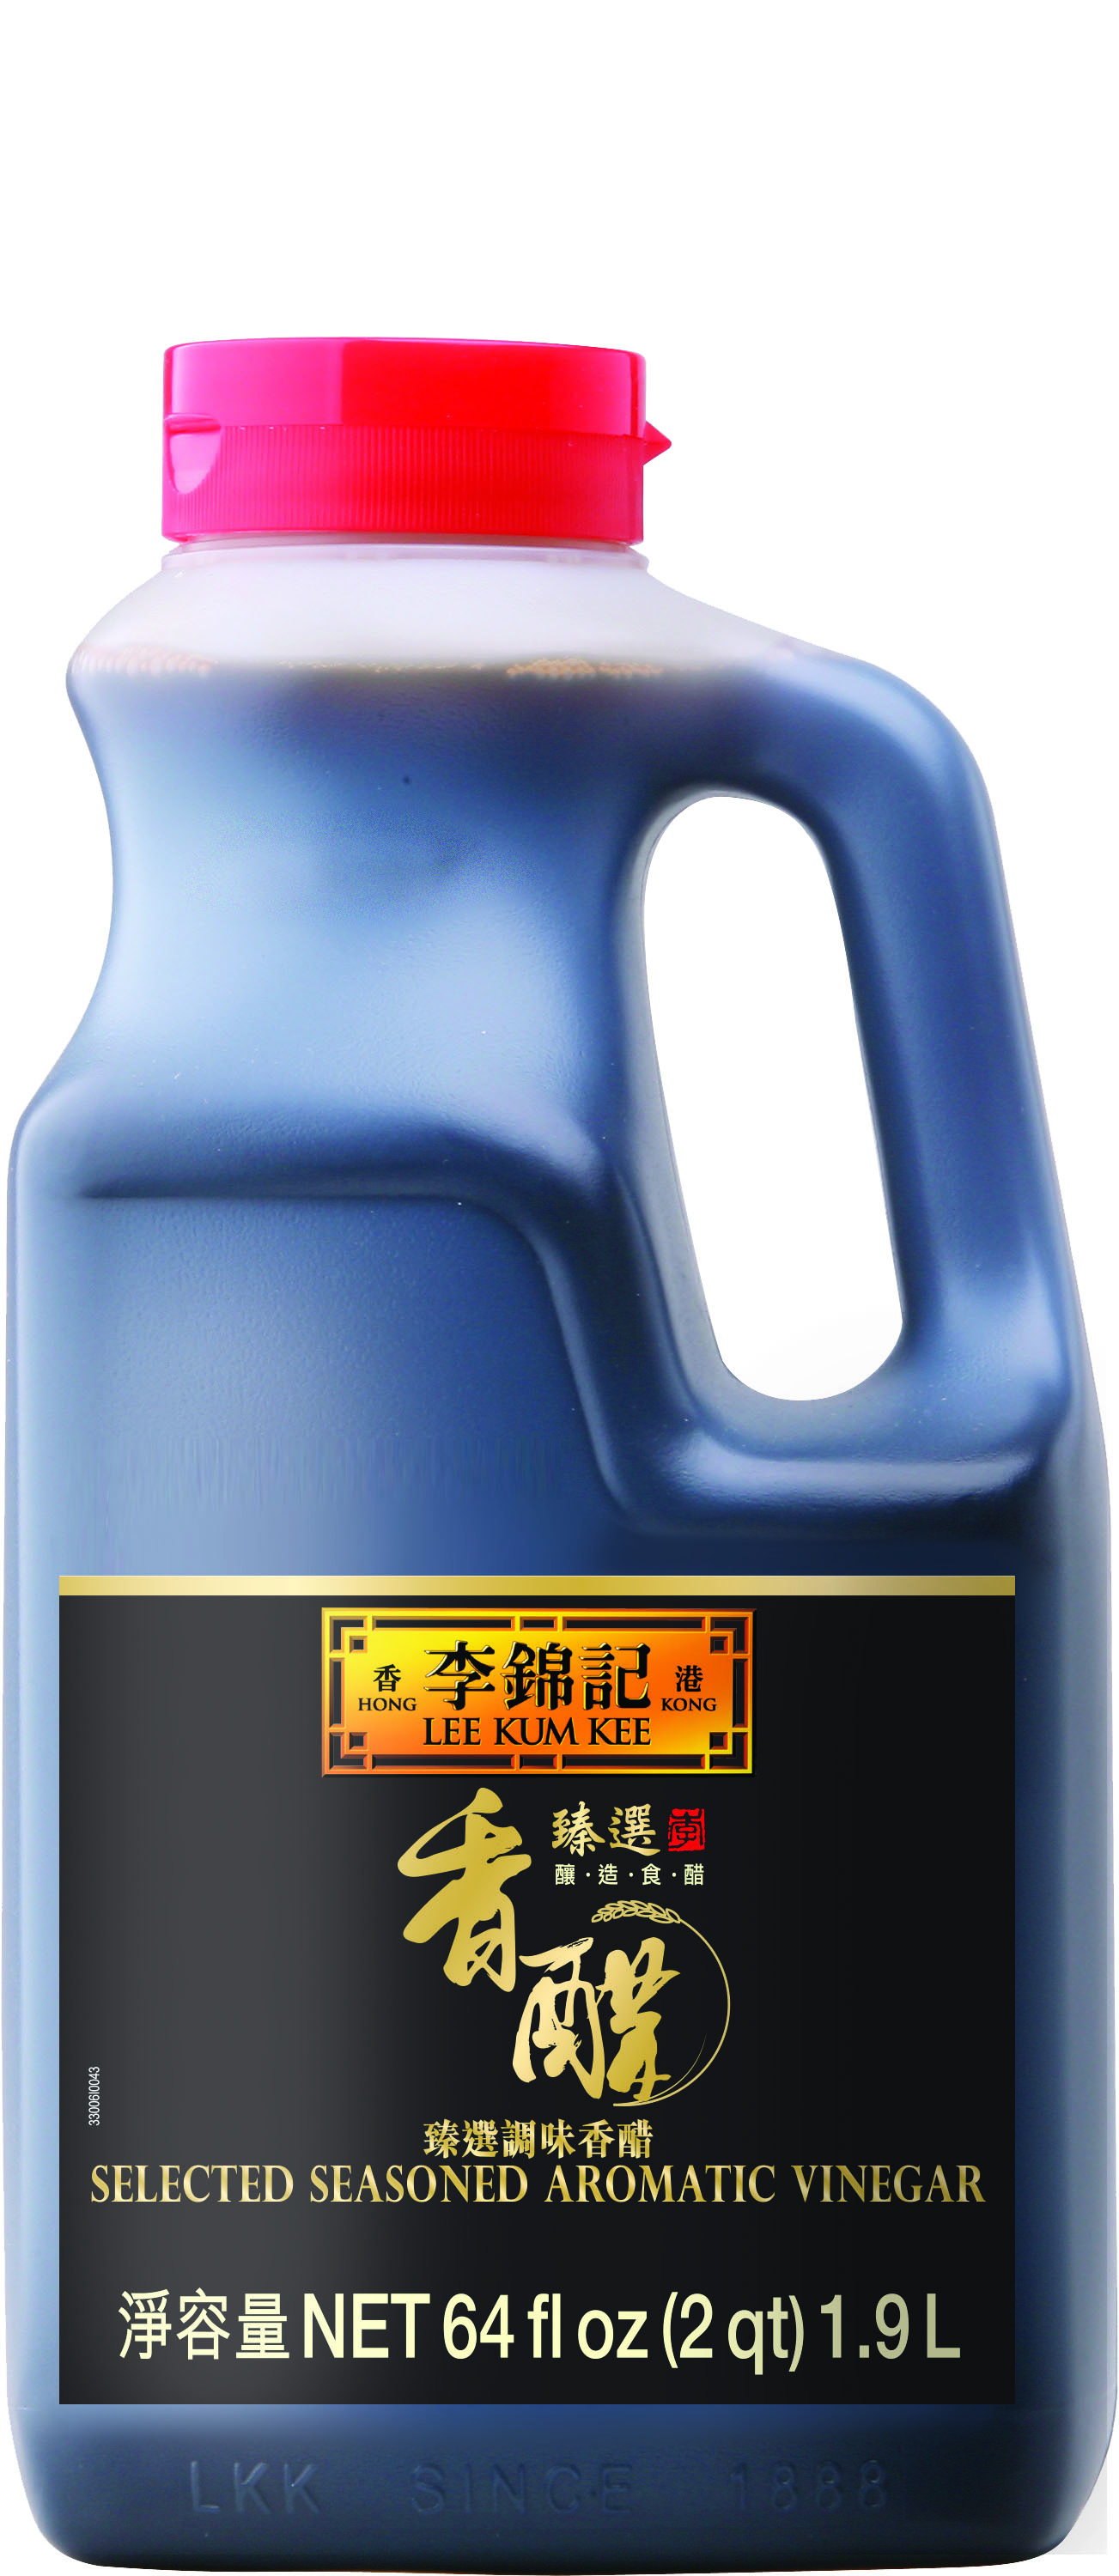 Selected Seasoned Aromatic Vinegar, 2.2 kg plastic pail